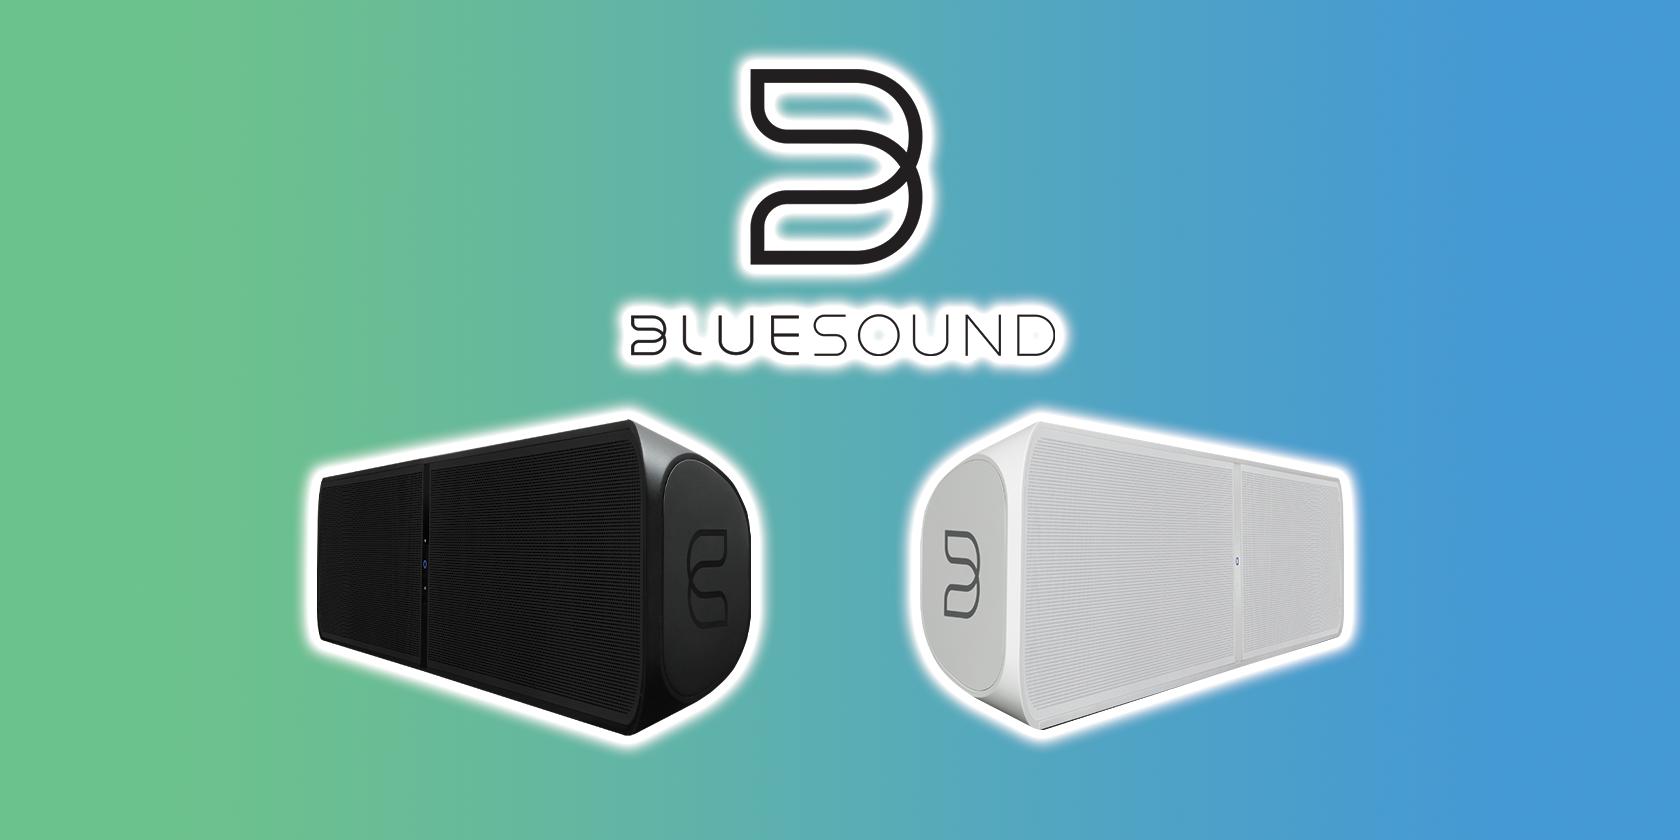 bluesound pulse soundbar and logo